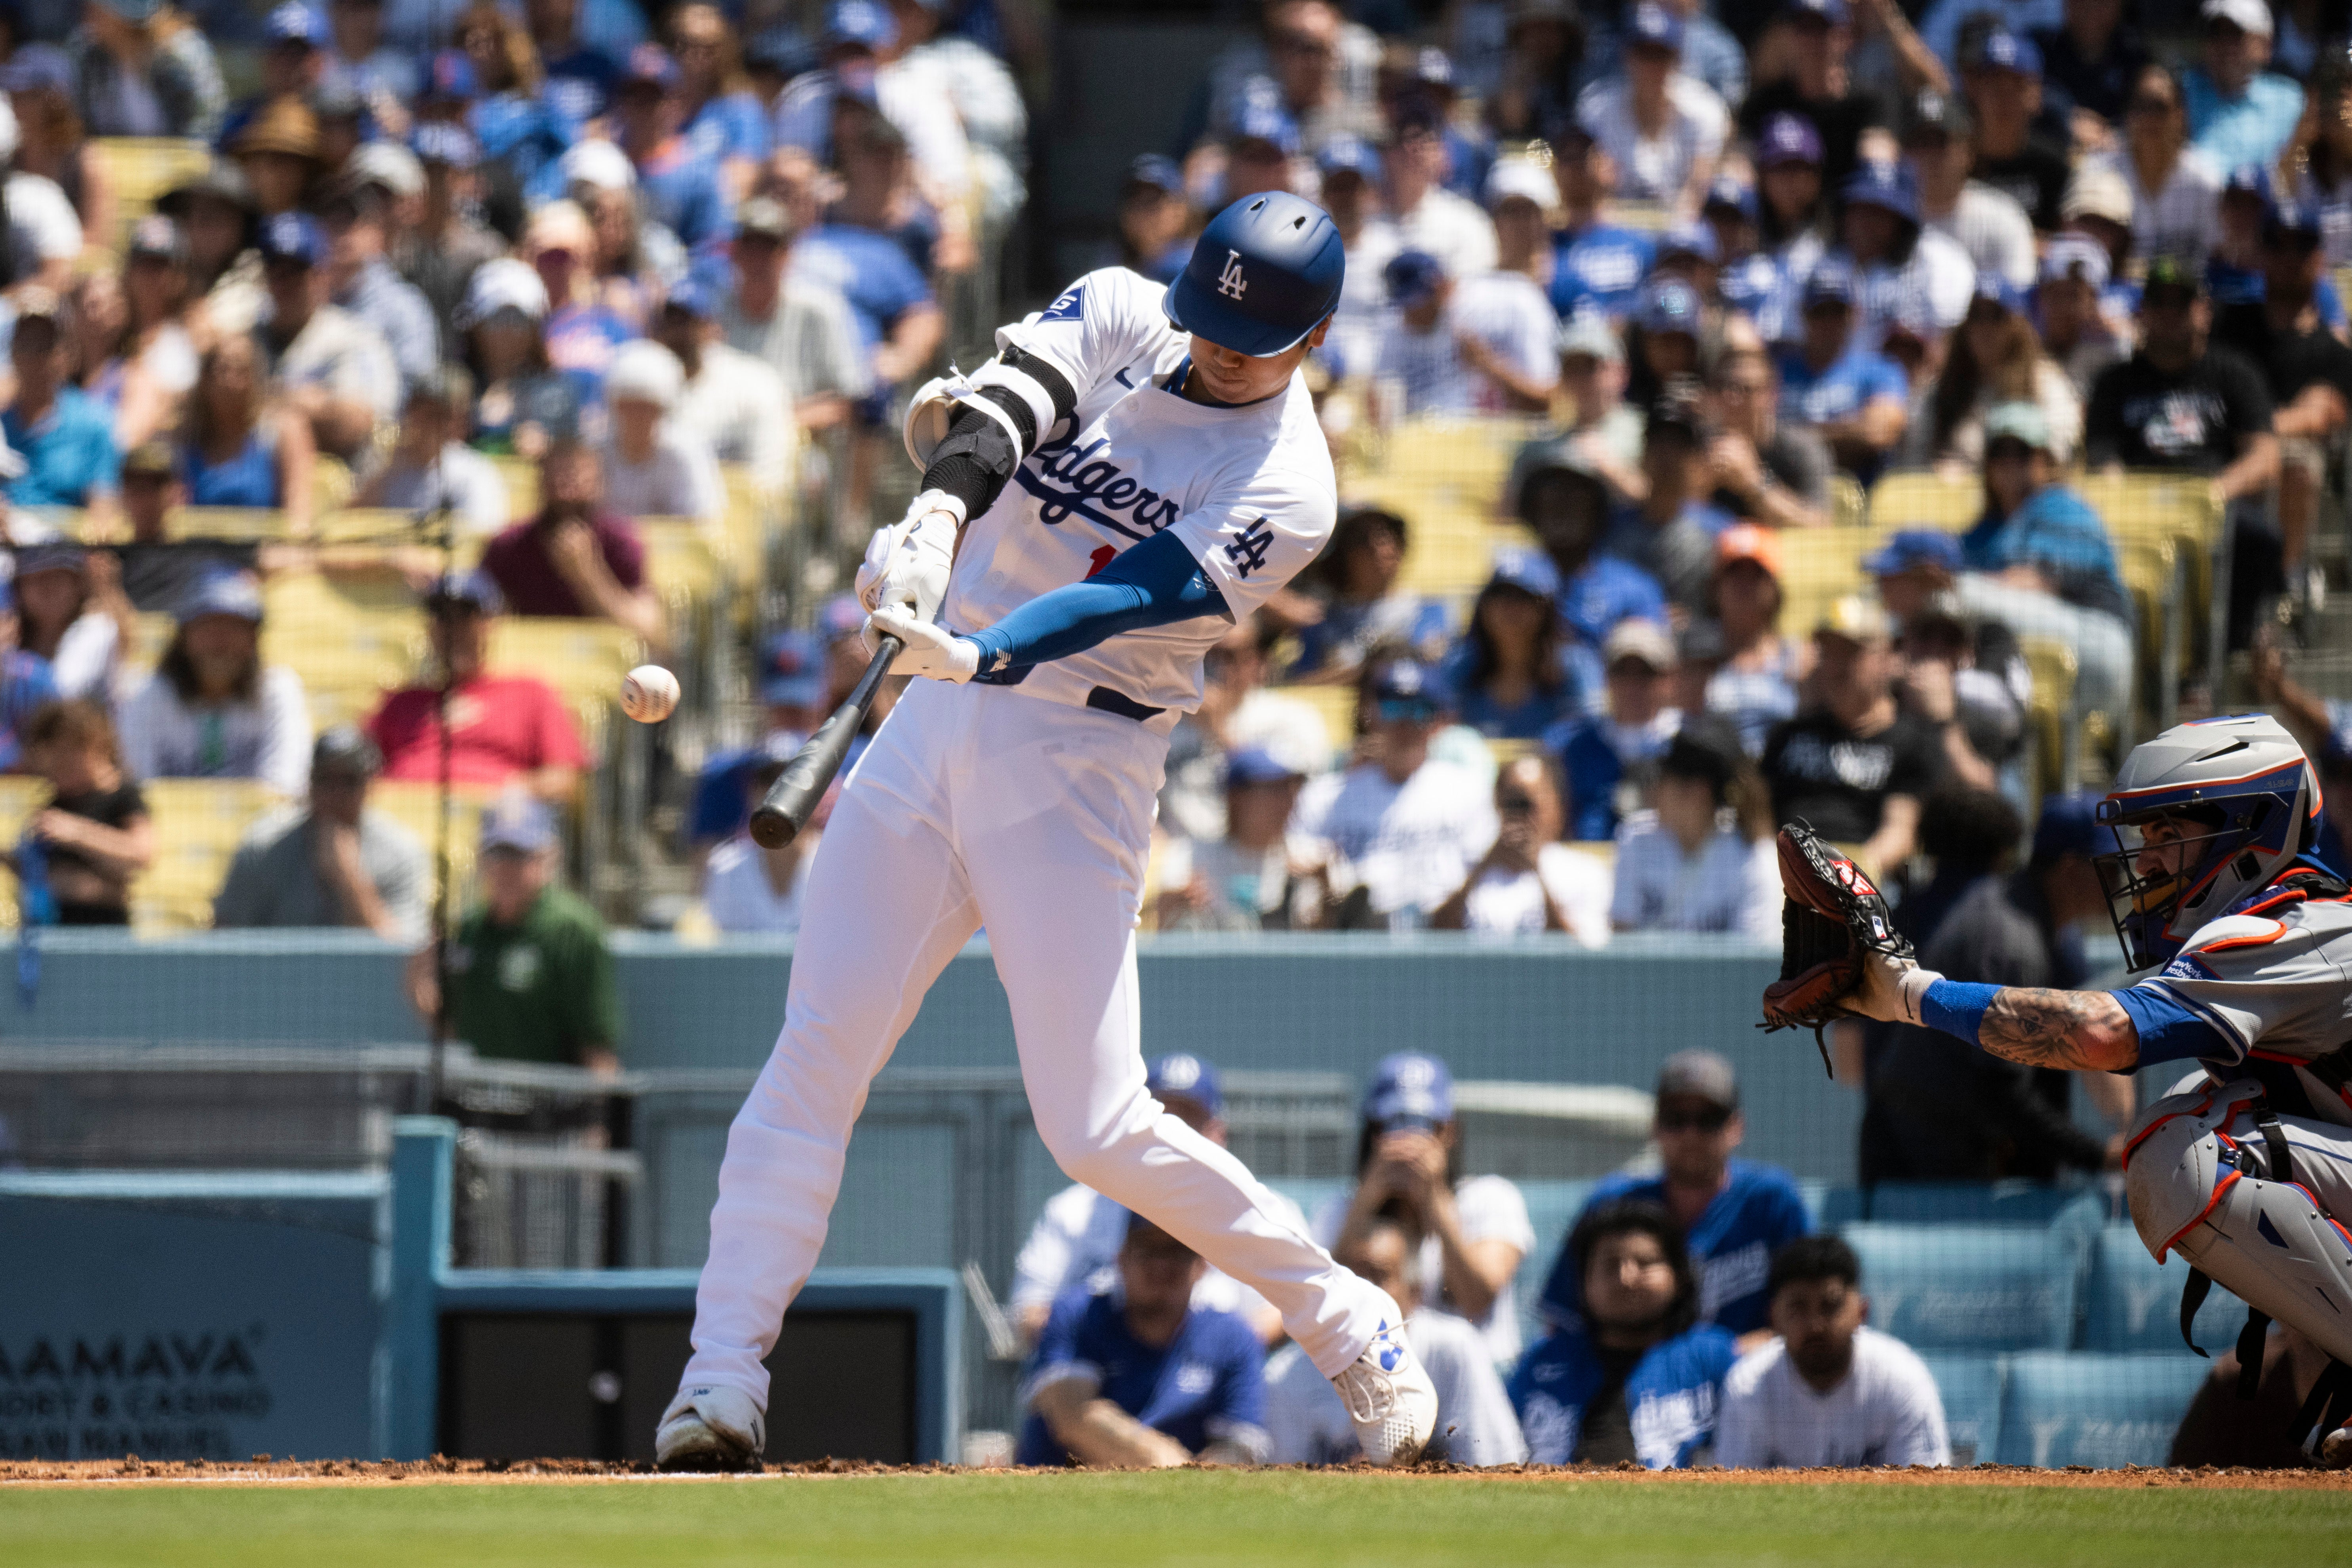 Shohei Ohtani slammed his 176th MLB home run